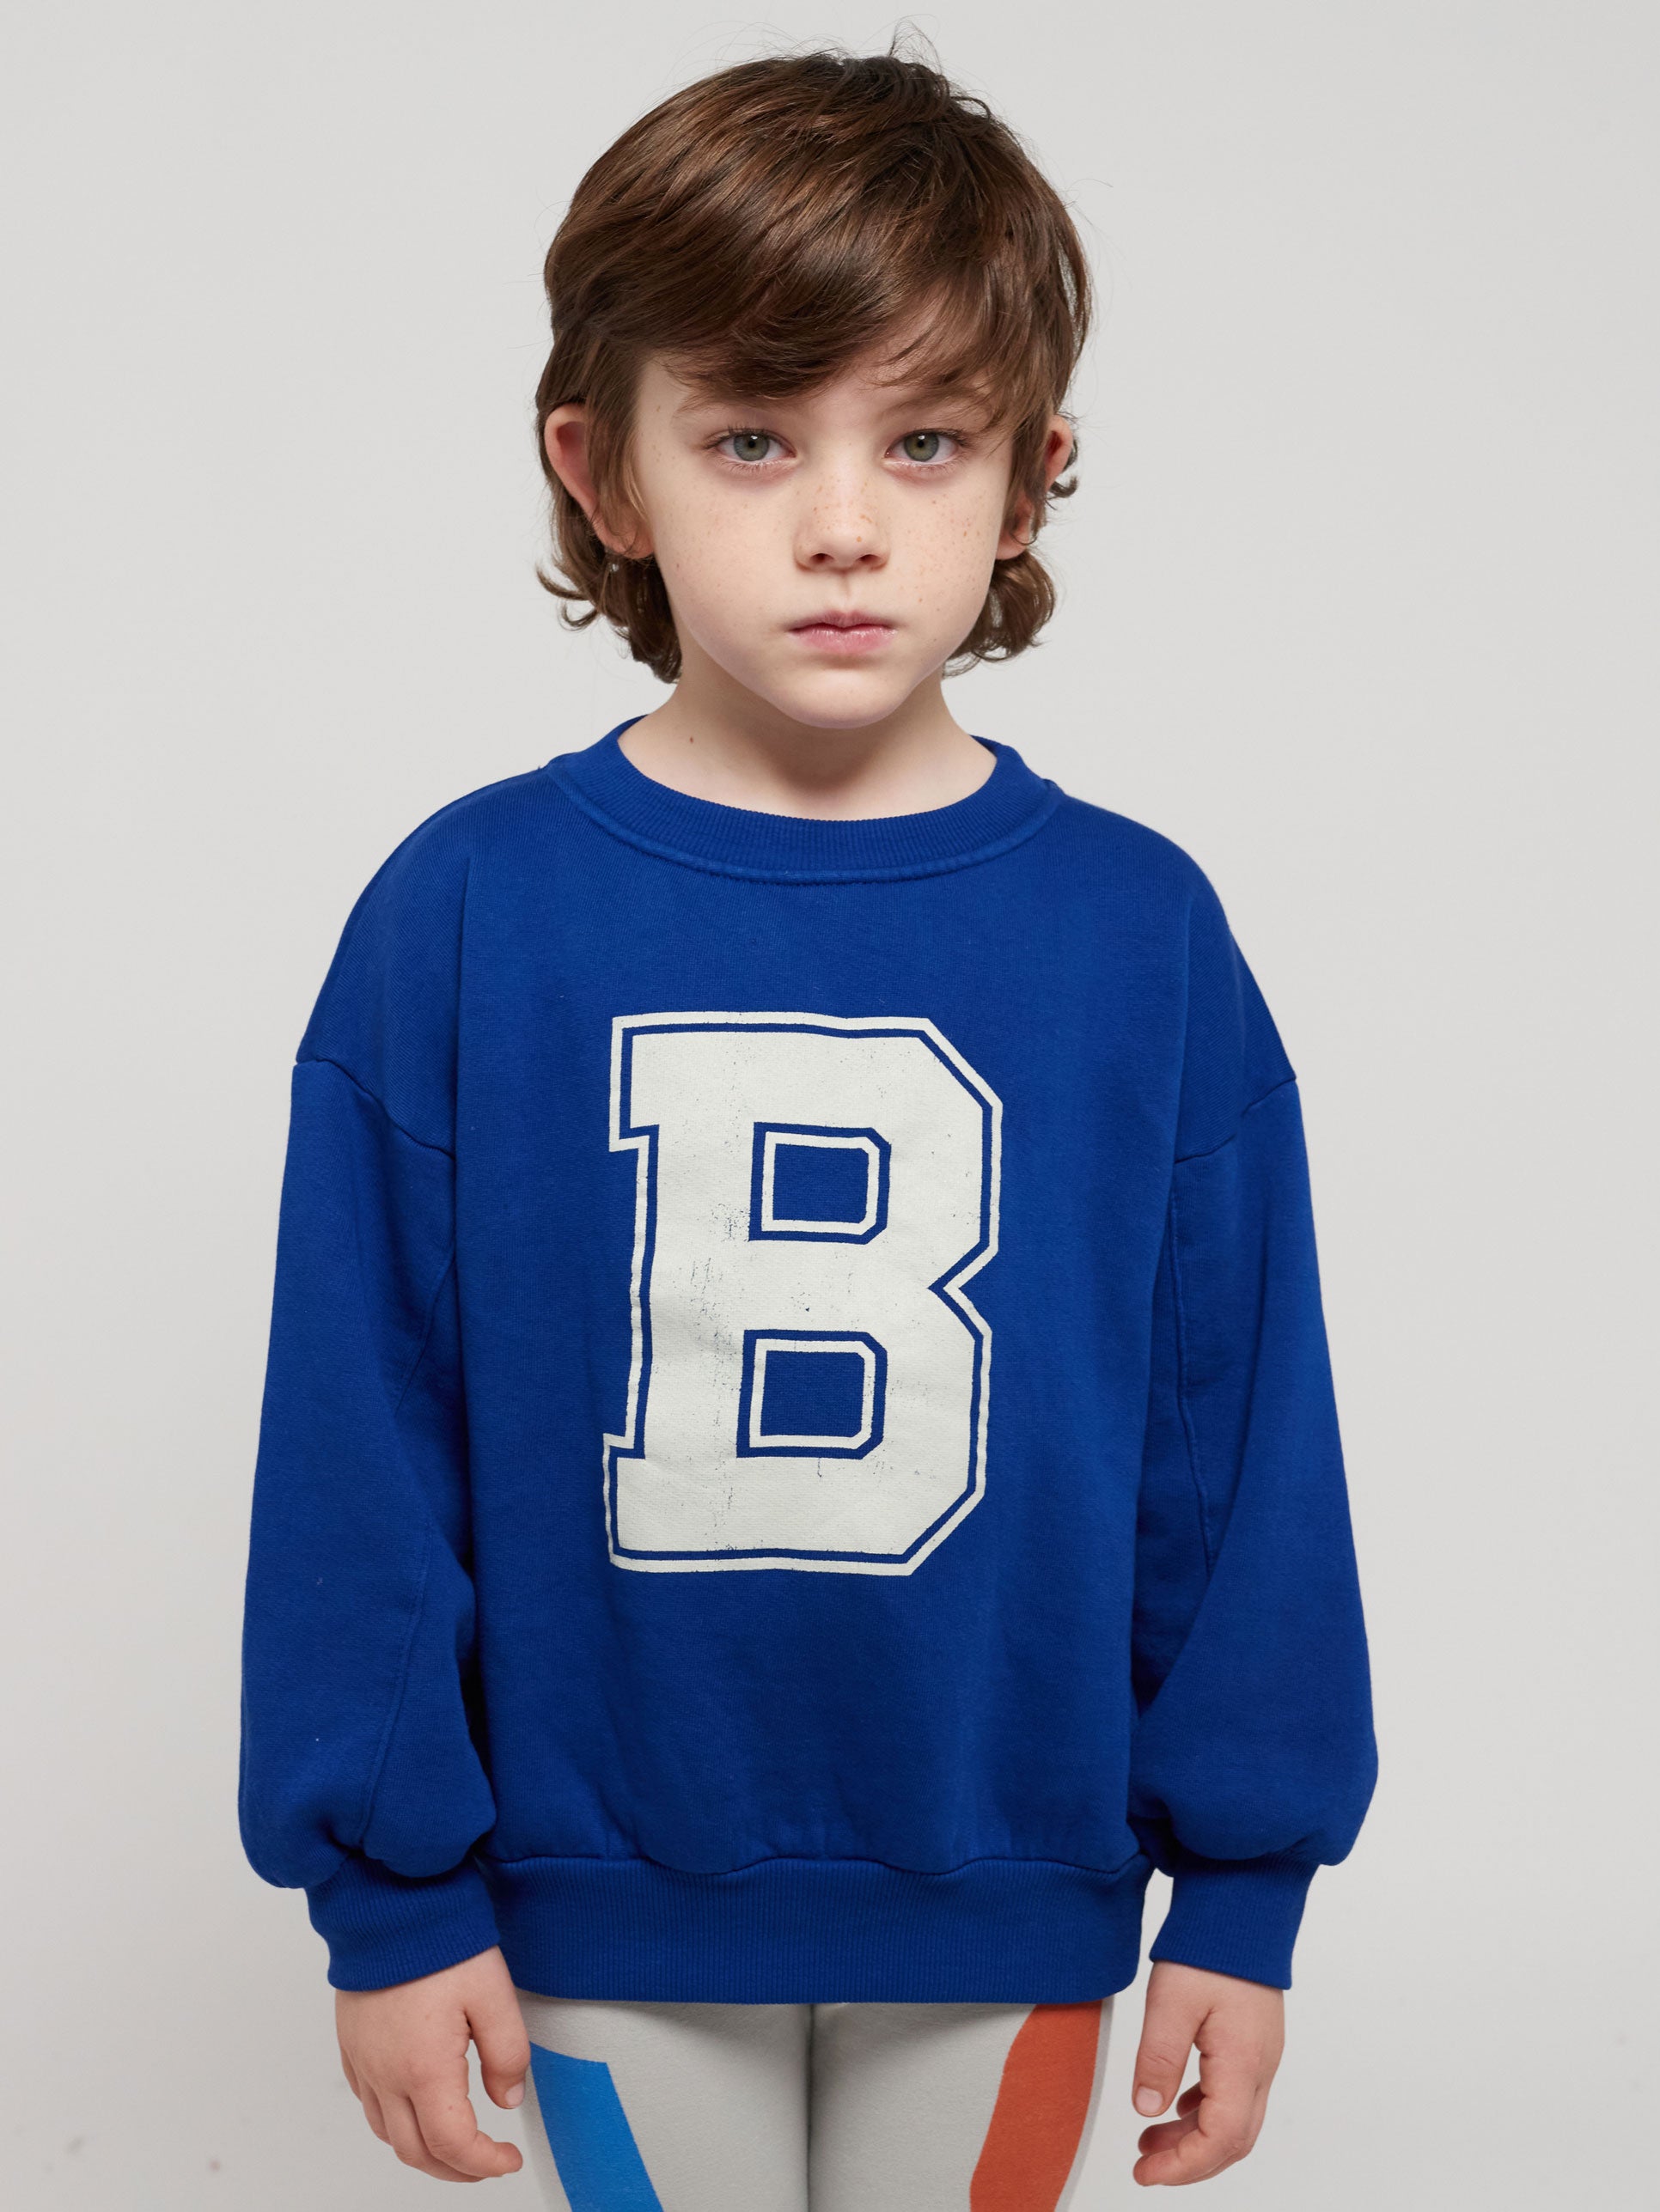 Big B sweatshirt – Bobo Choses